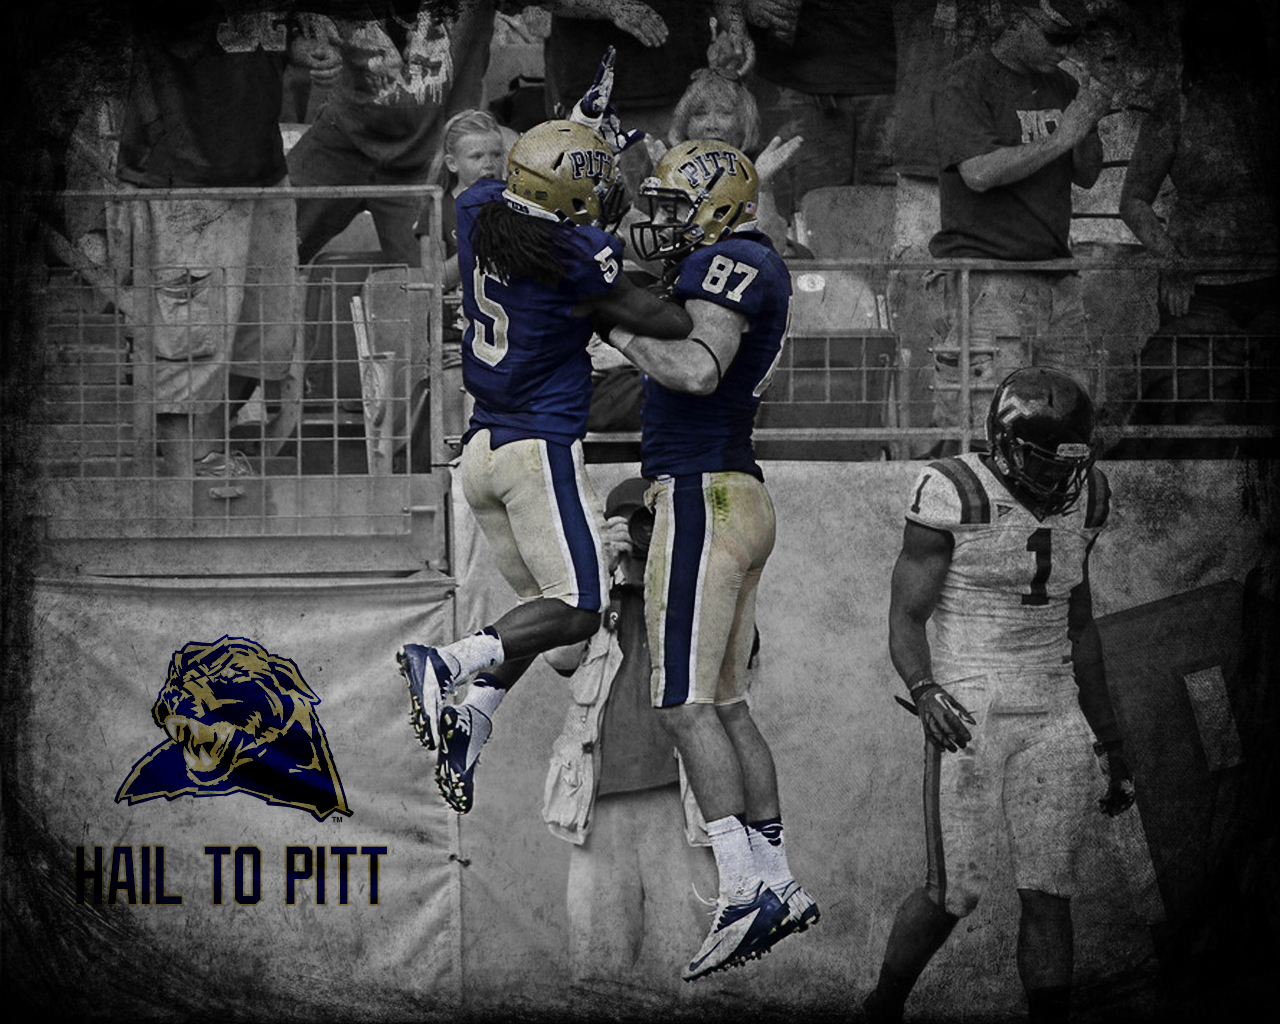 Pitt Panthers Wallpaper